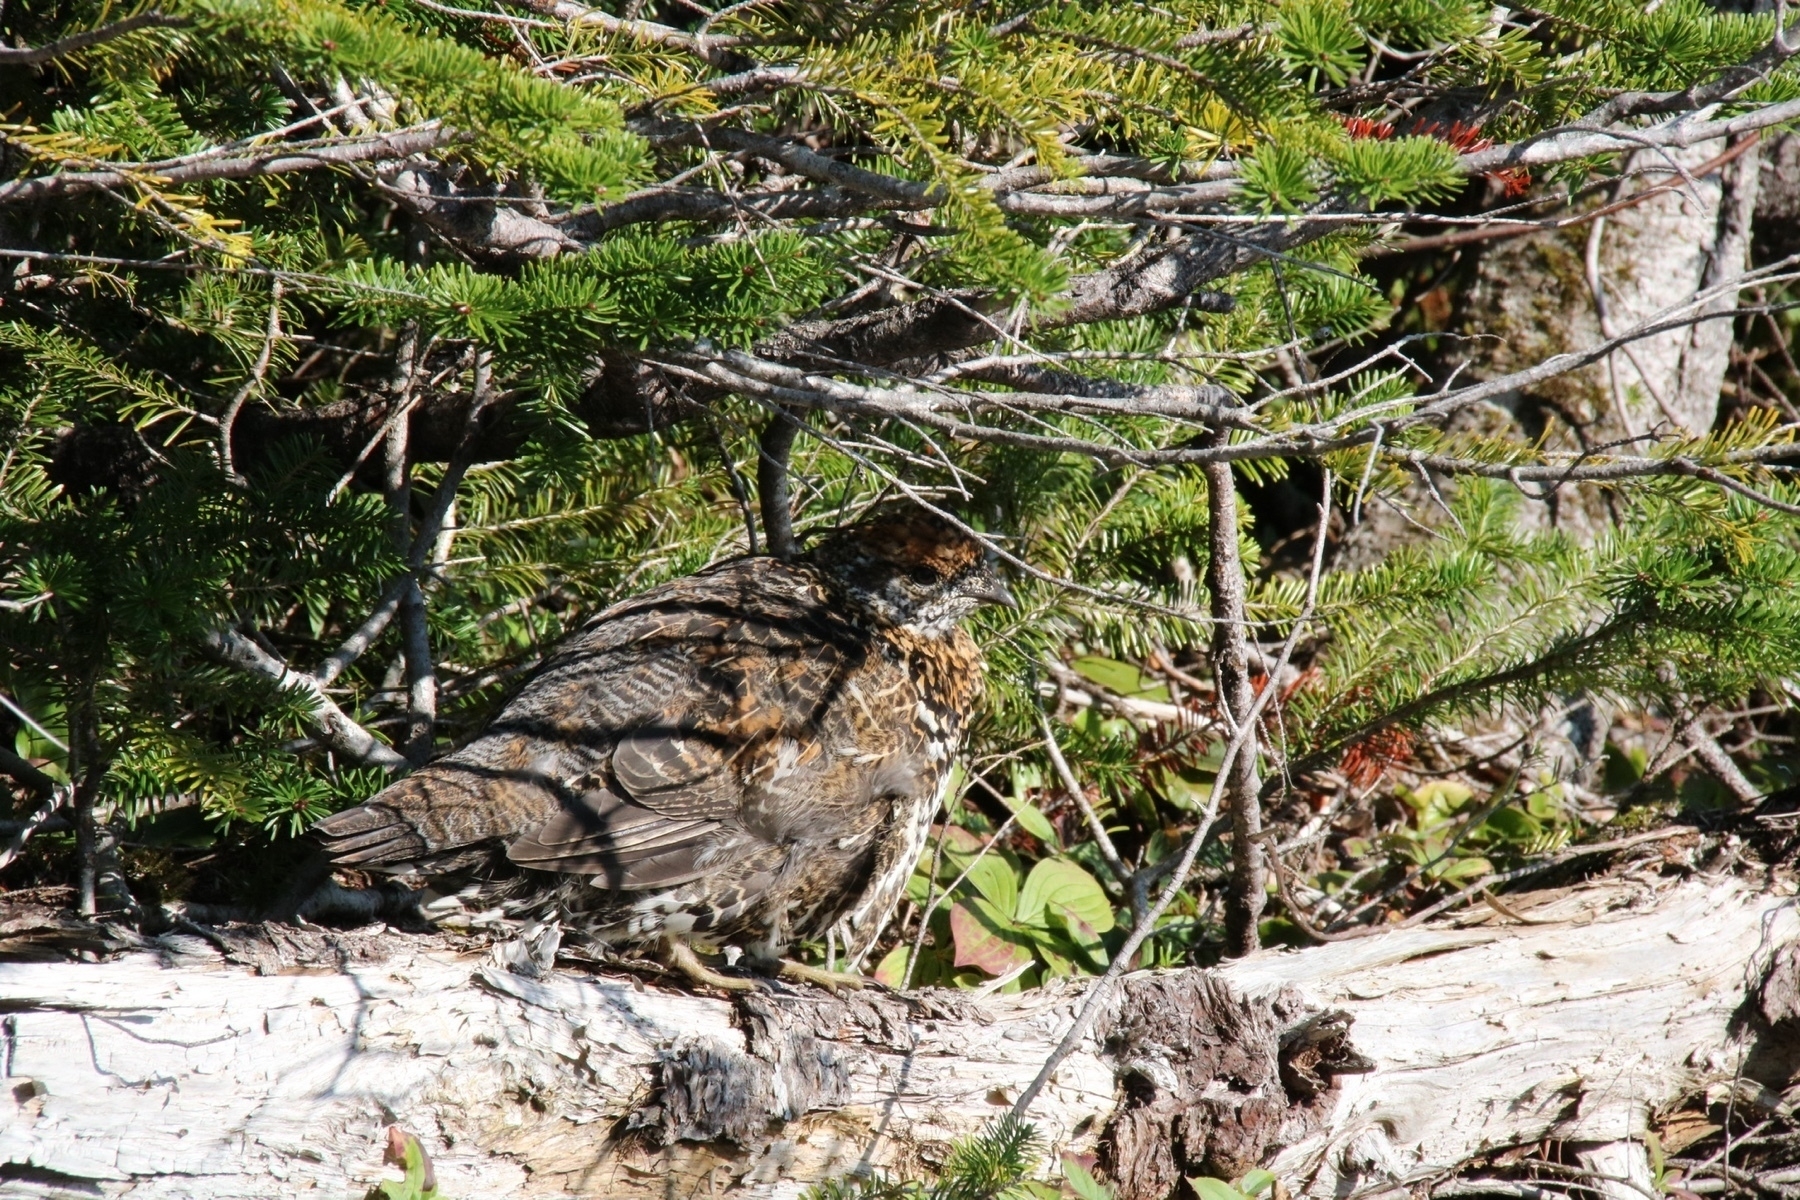 ruffed grouse on a log, hidden in vegetation